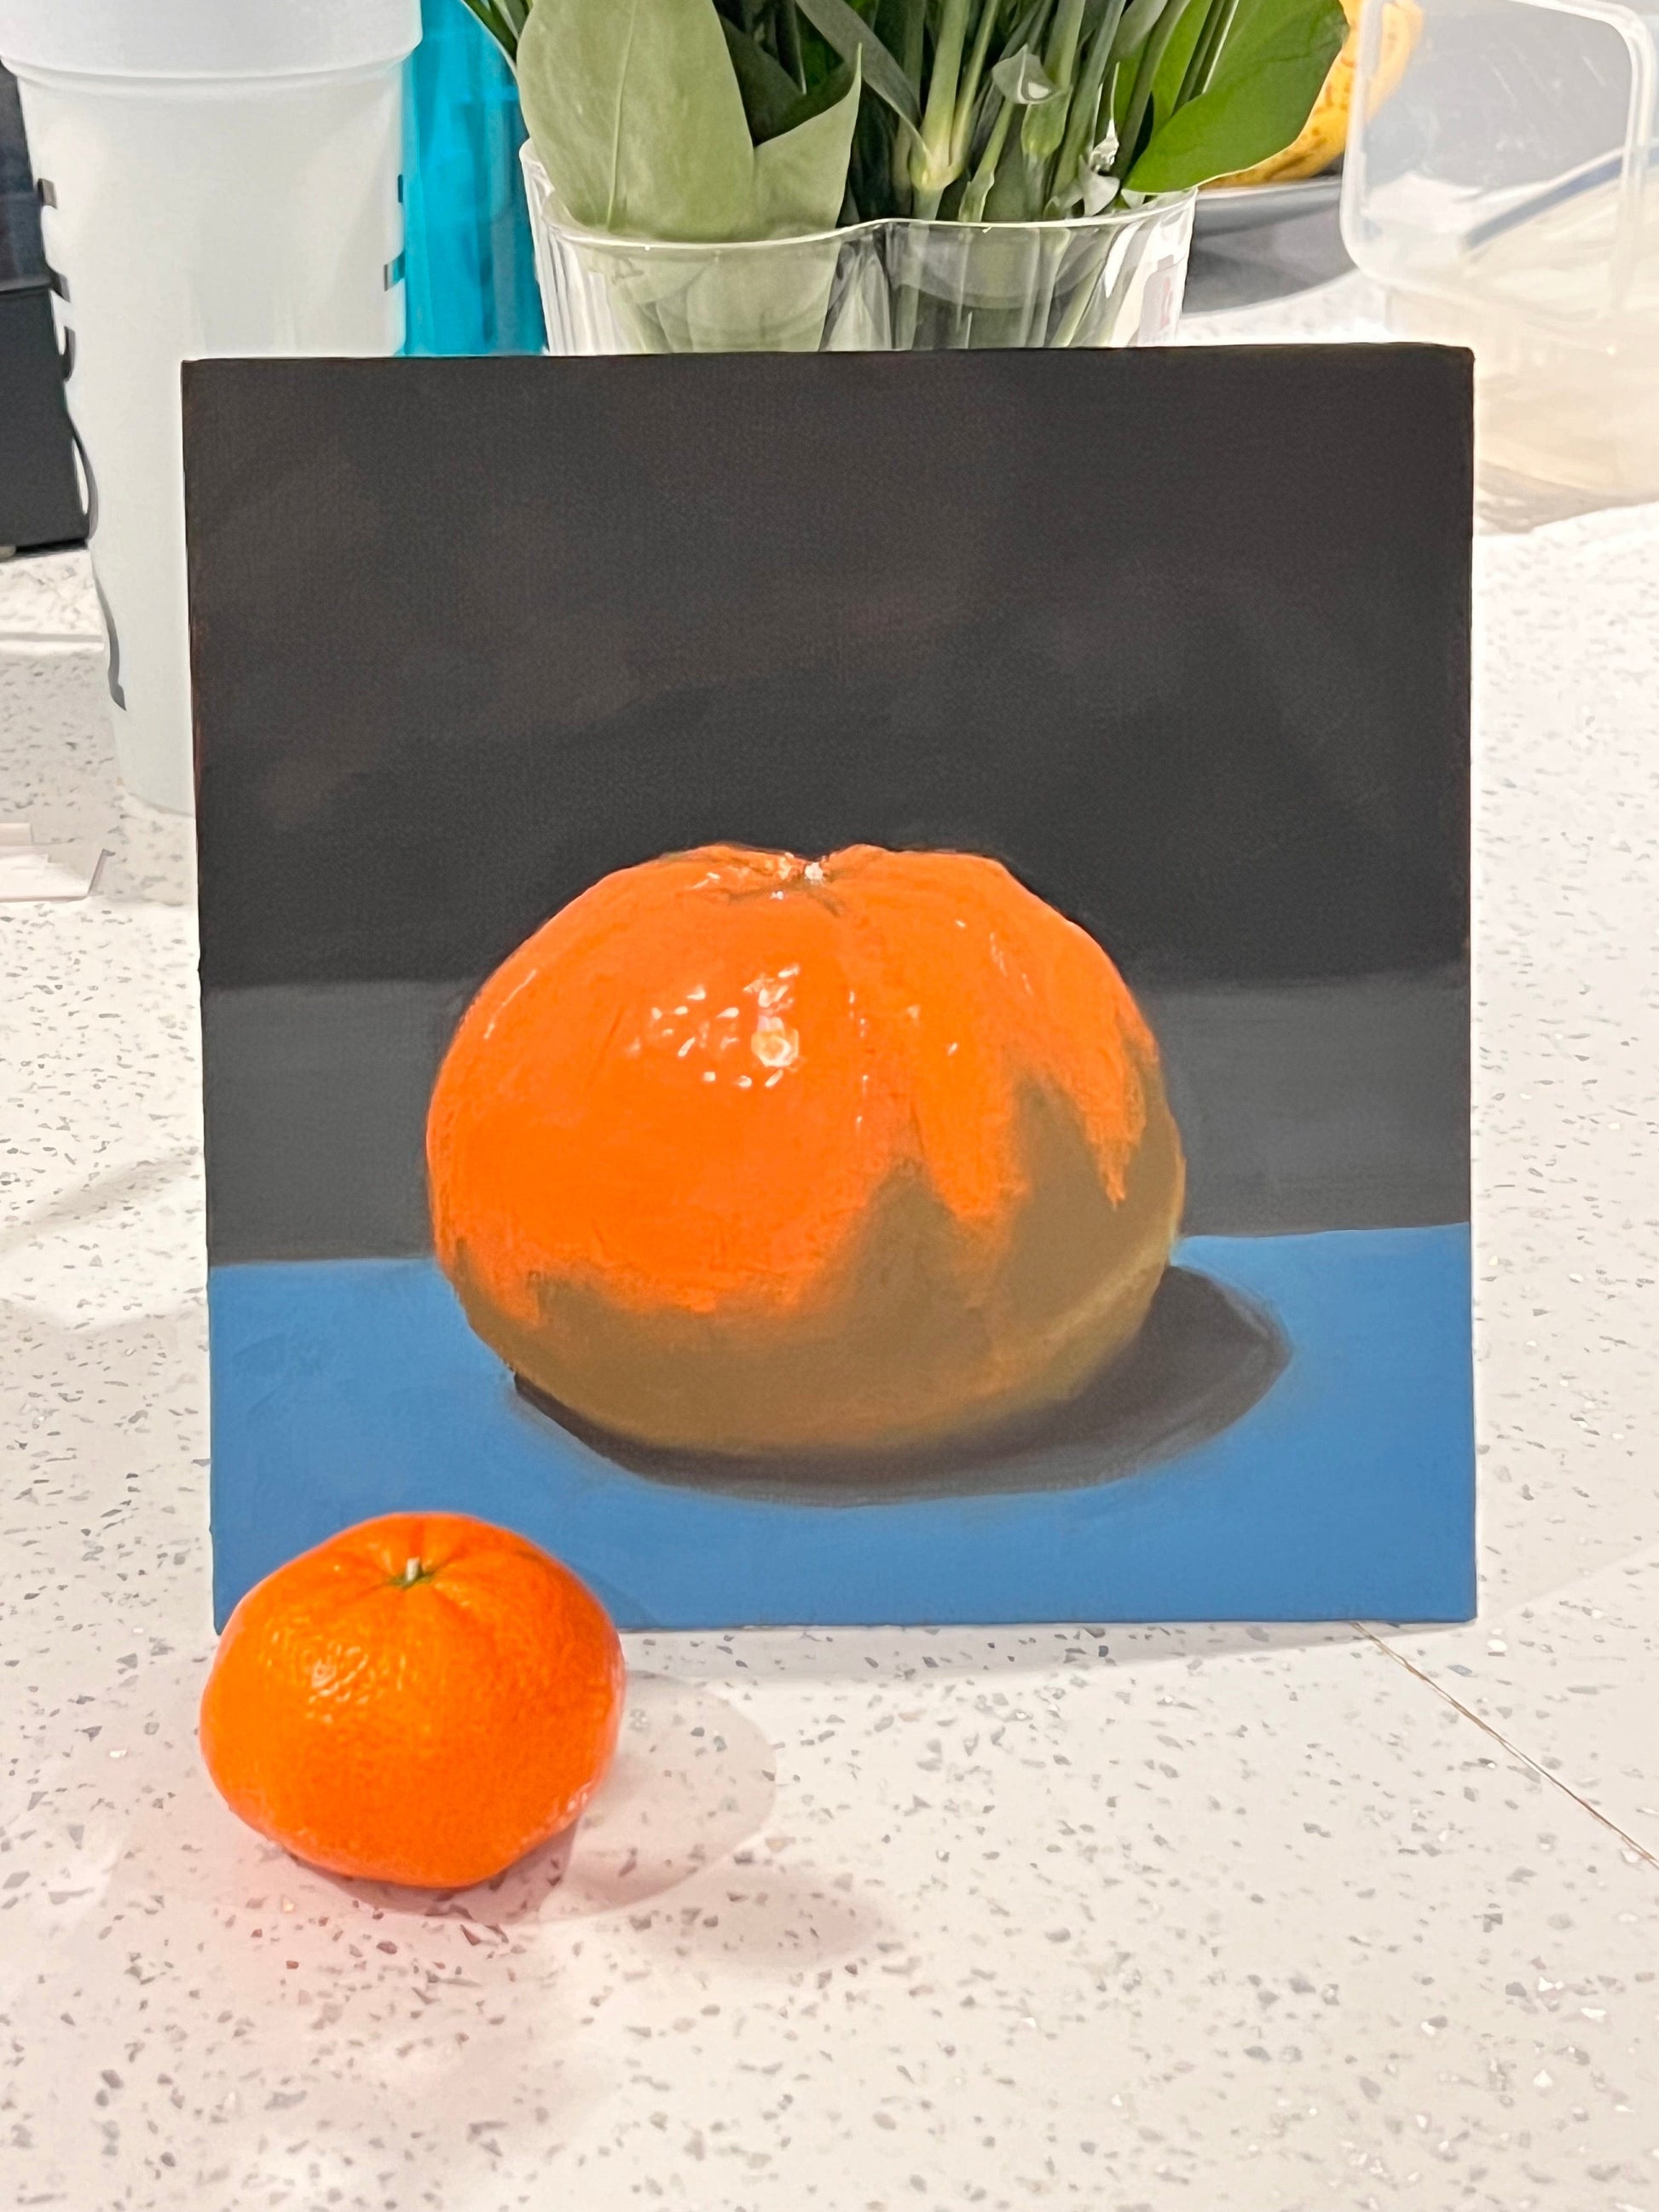 Orange by Chris Parry Jewellery